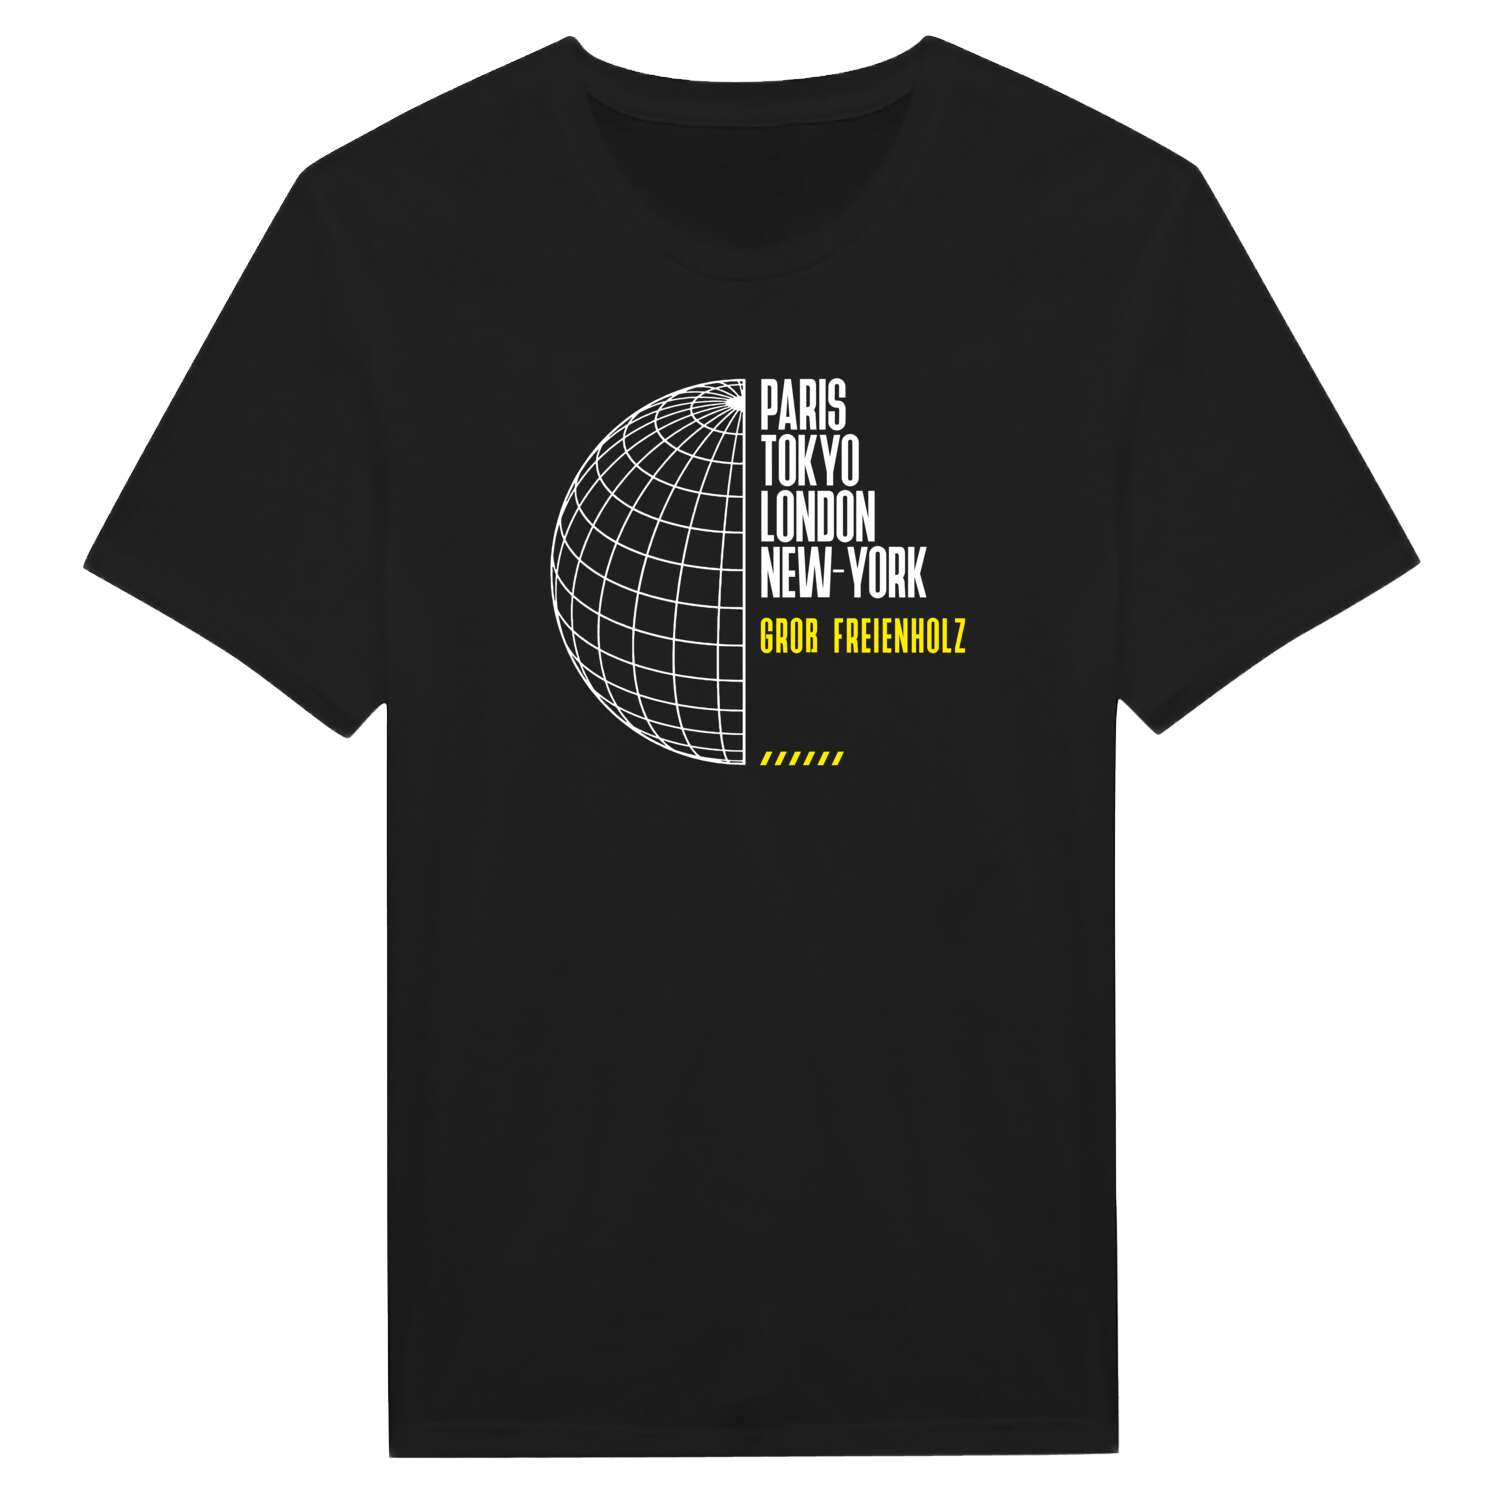 Groß Freienholz T-Shirt »Paris Tokyo London«